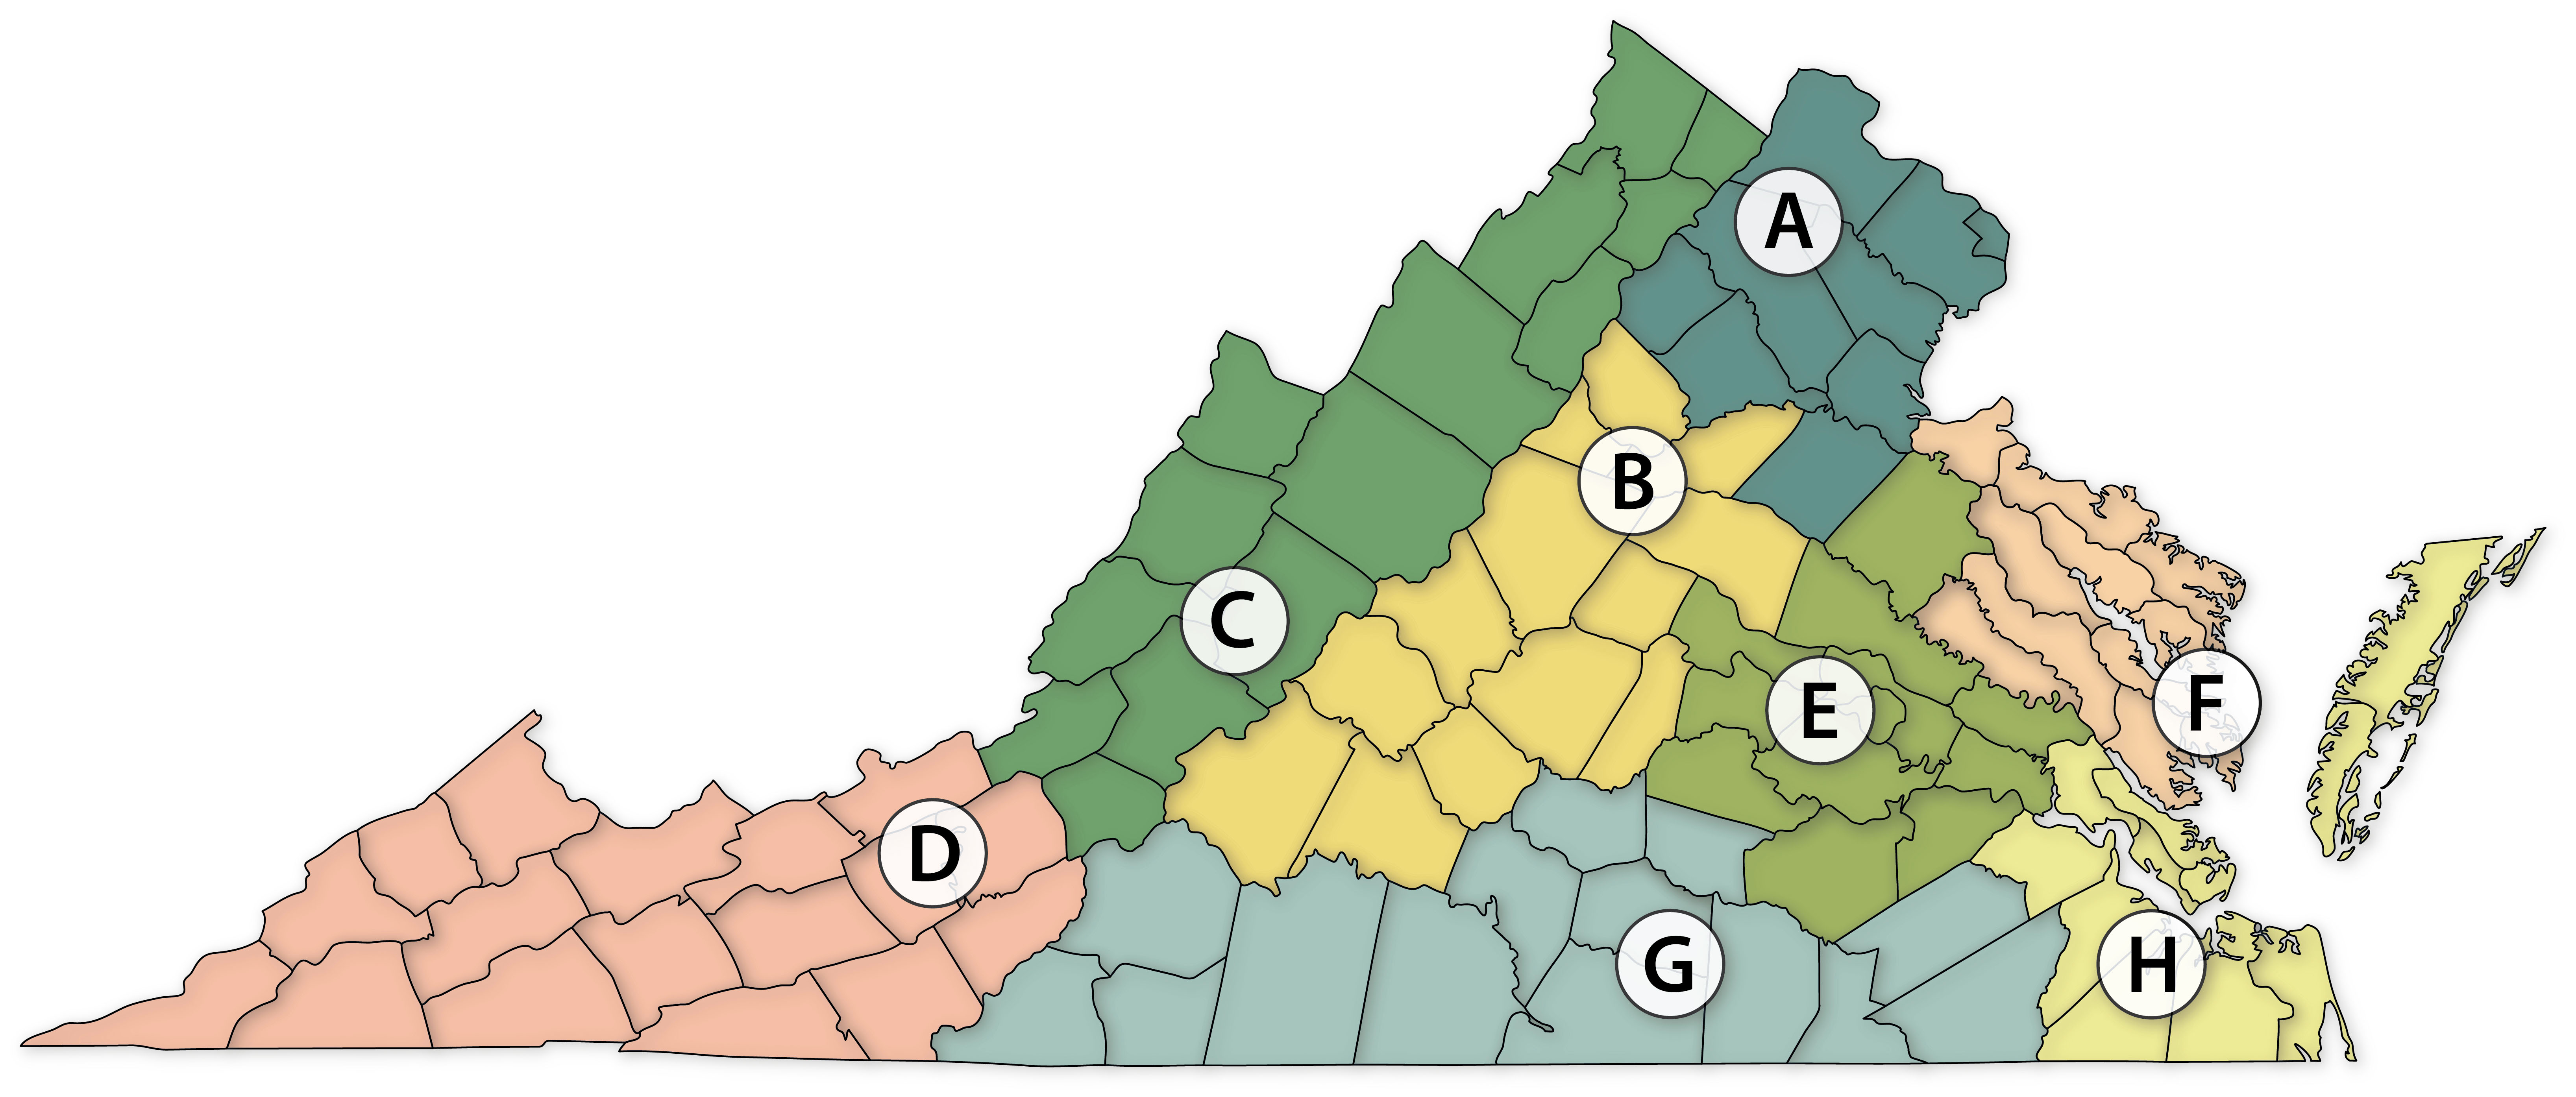 Map of Virginia regions